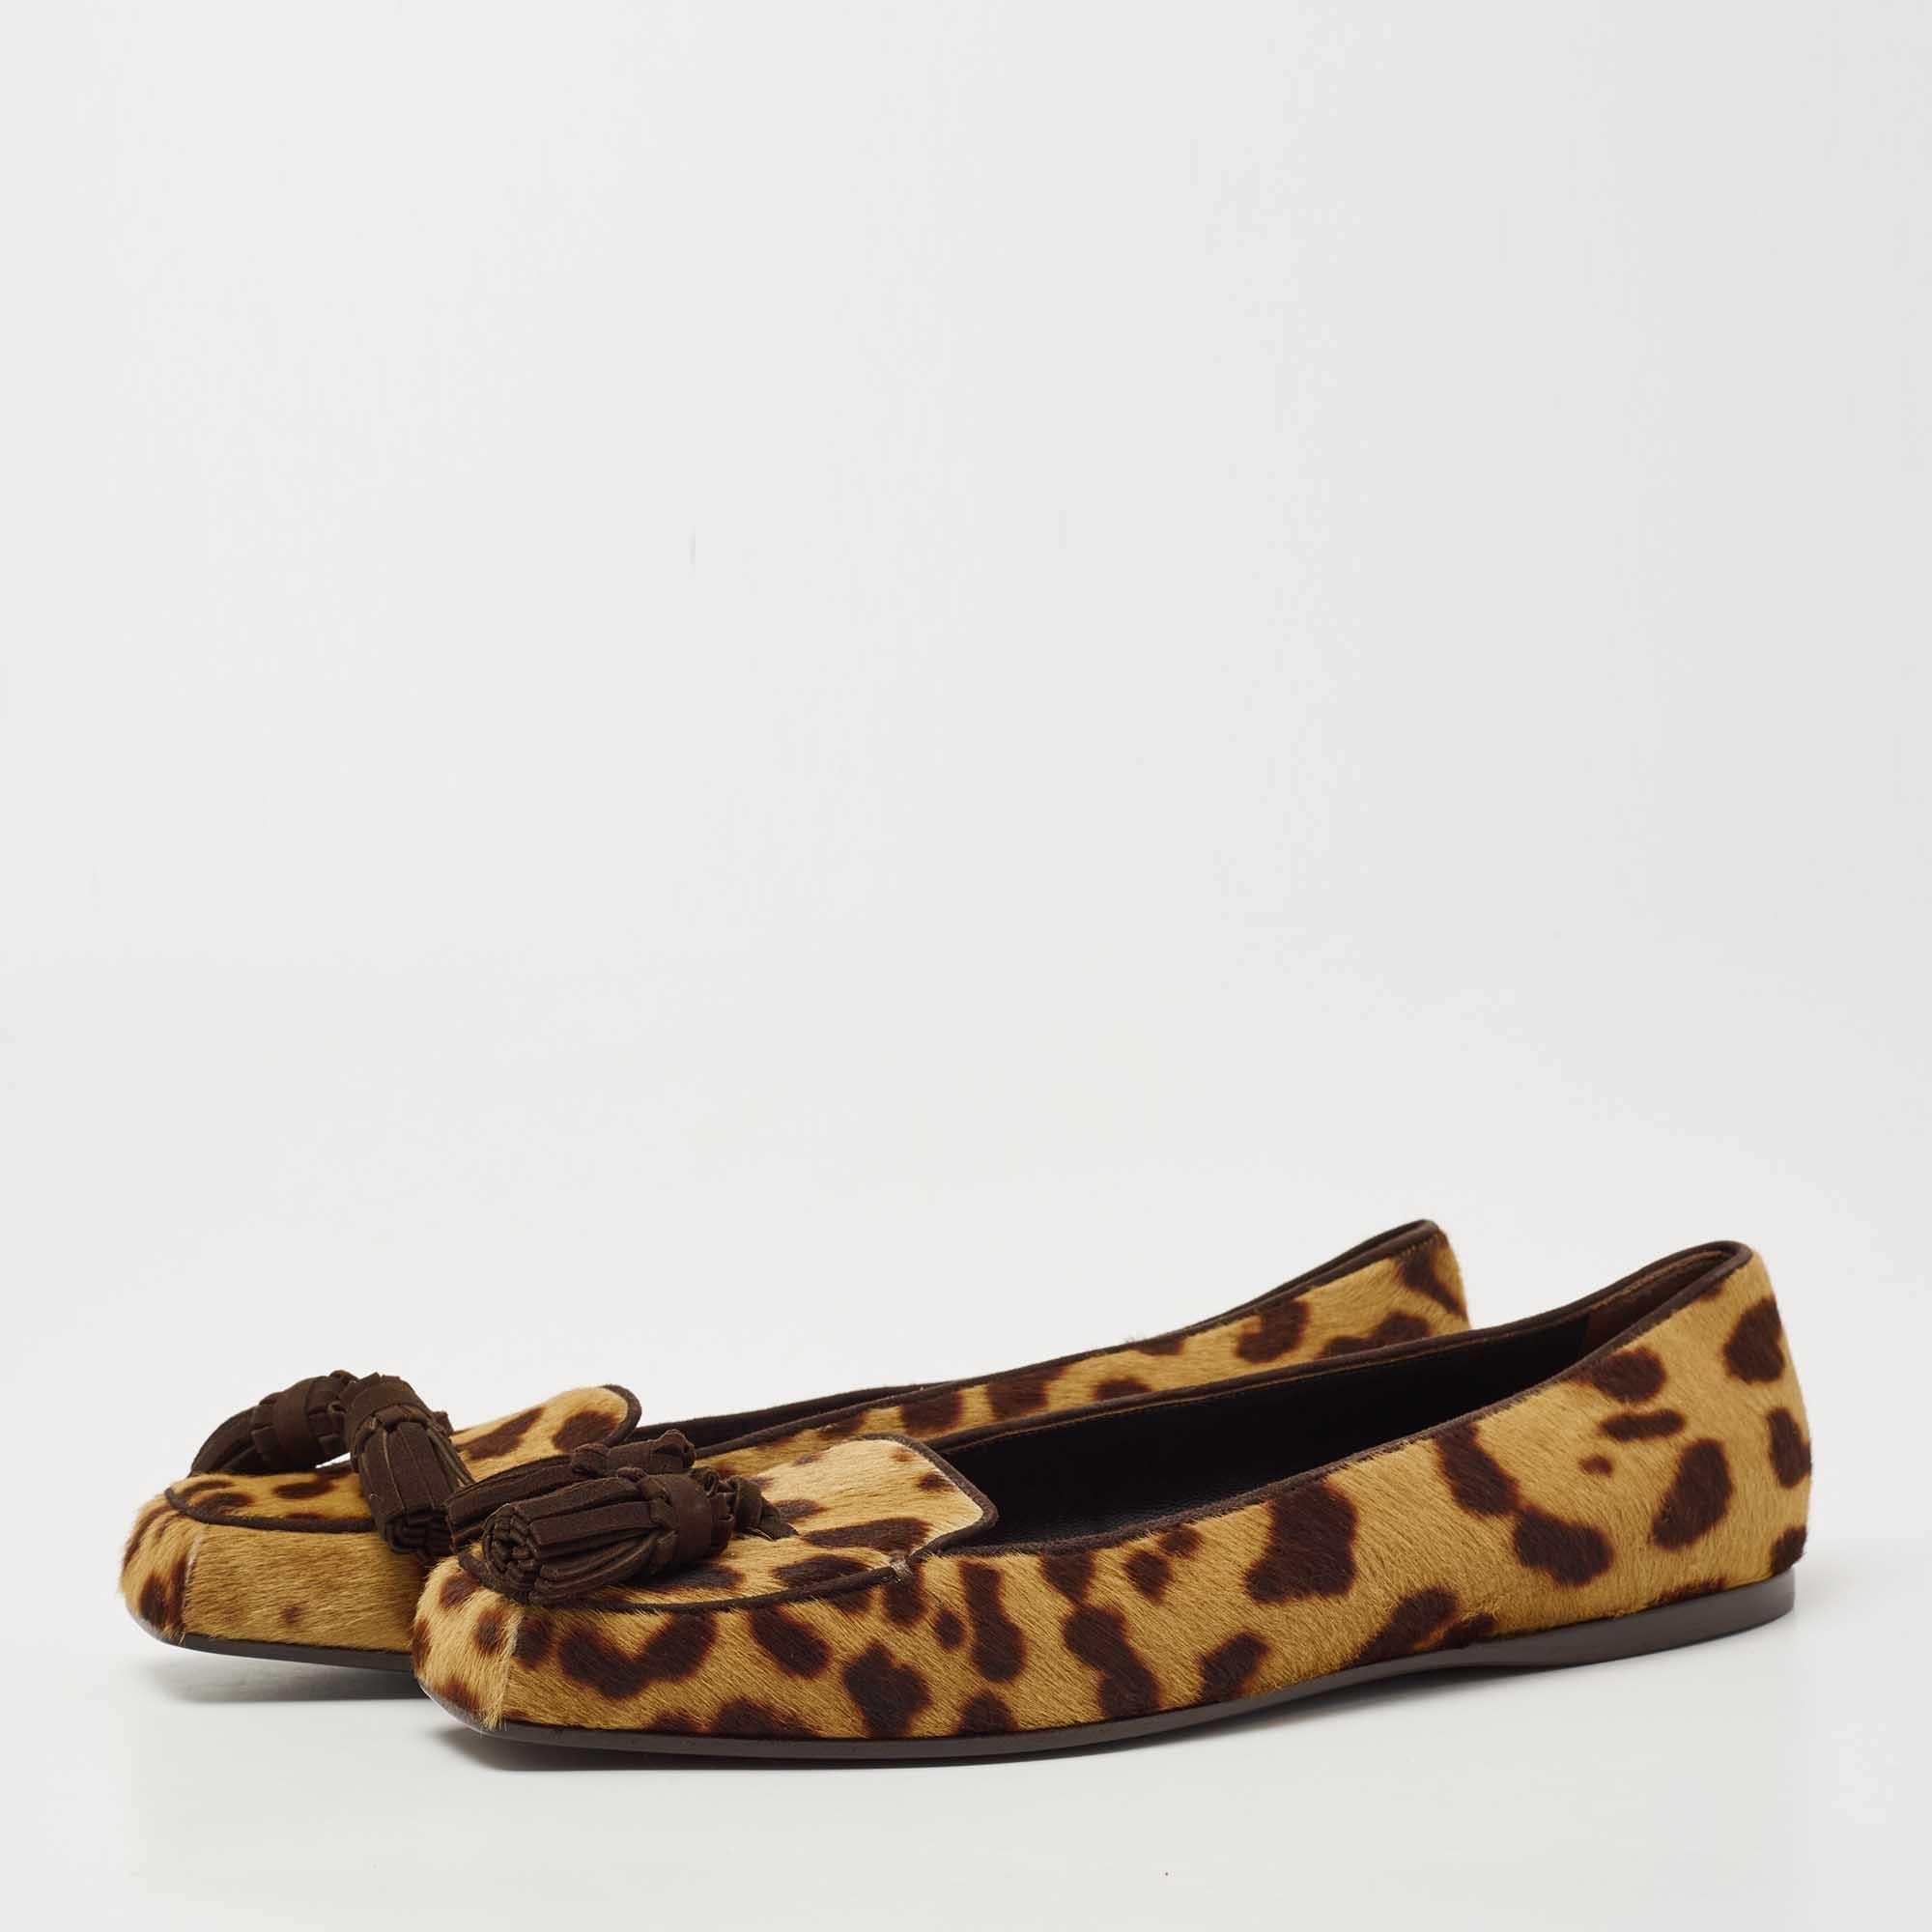 Women's Yves Saint Laurent Brown/Beige Leopard Print Calf Hair Fringe Loafers Size 41